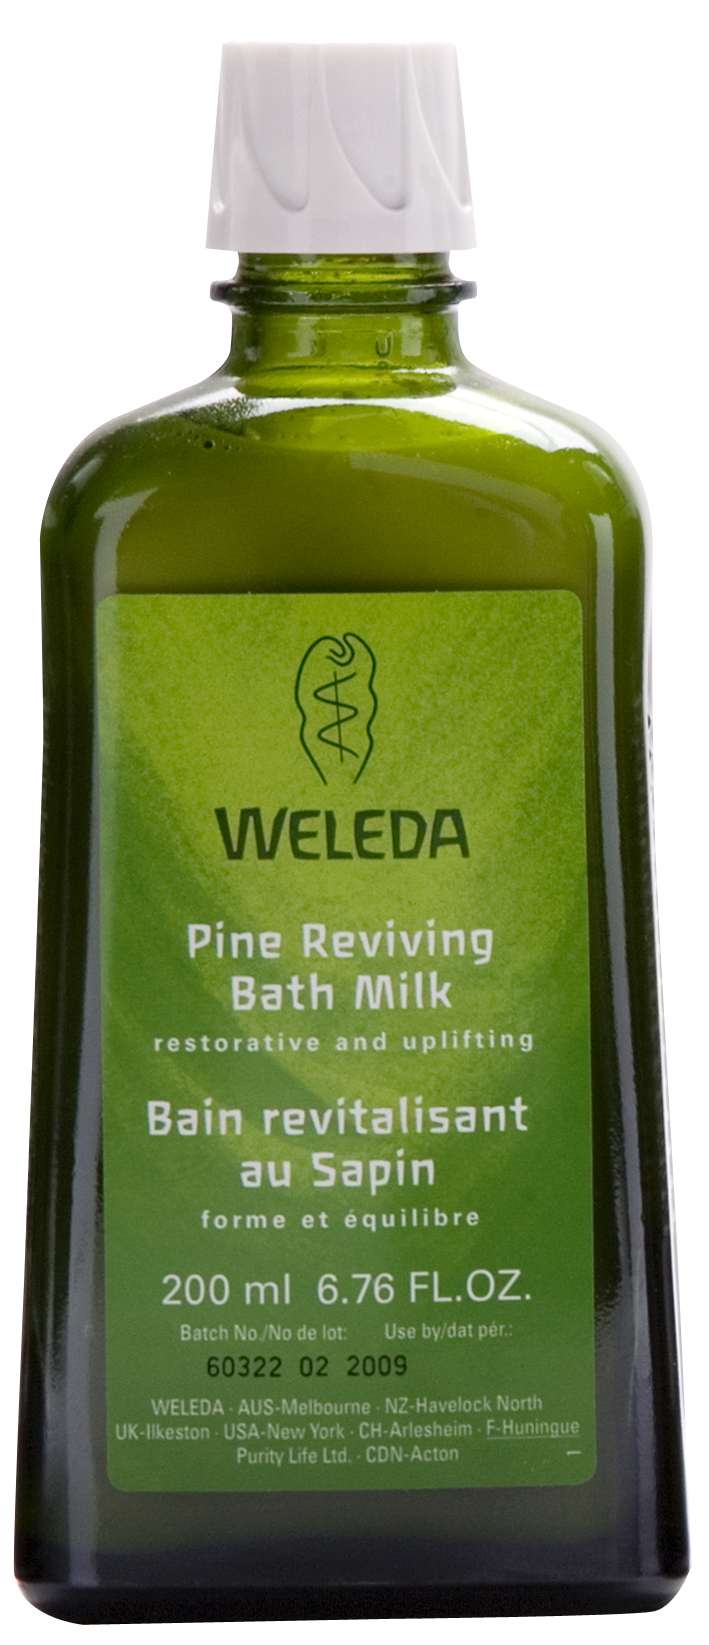 Buy Weleda Pine Reviving Bath Milk Online - 200ml